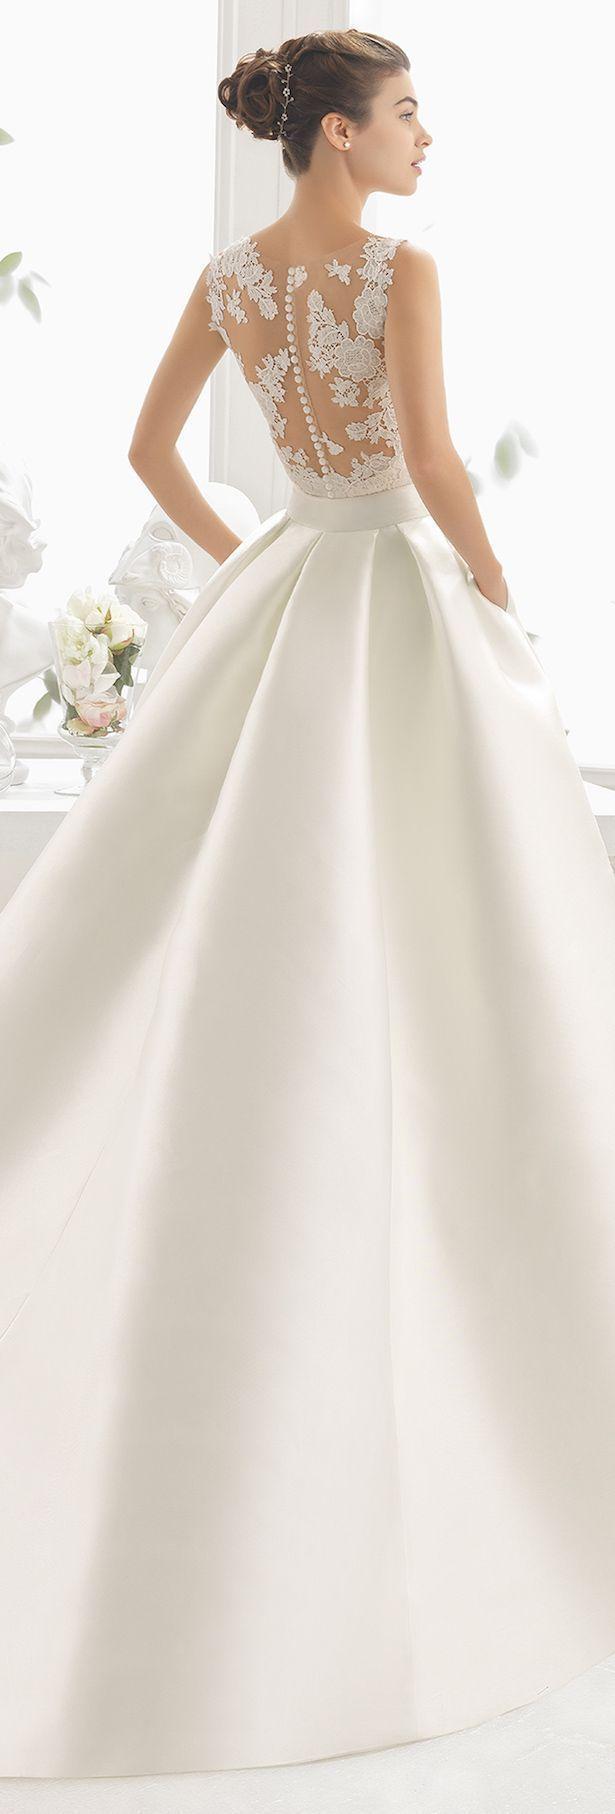 Wedding - Wedding Dress By Aire Barcelona 2017 Bridal Collection #weddingdress 